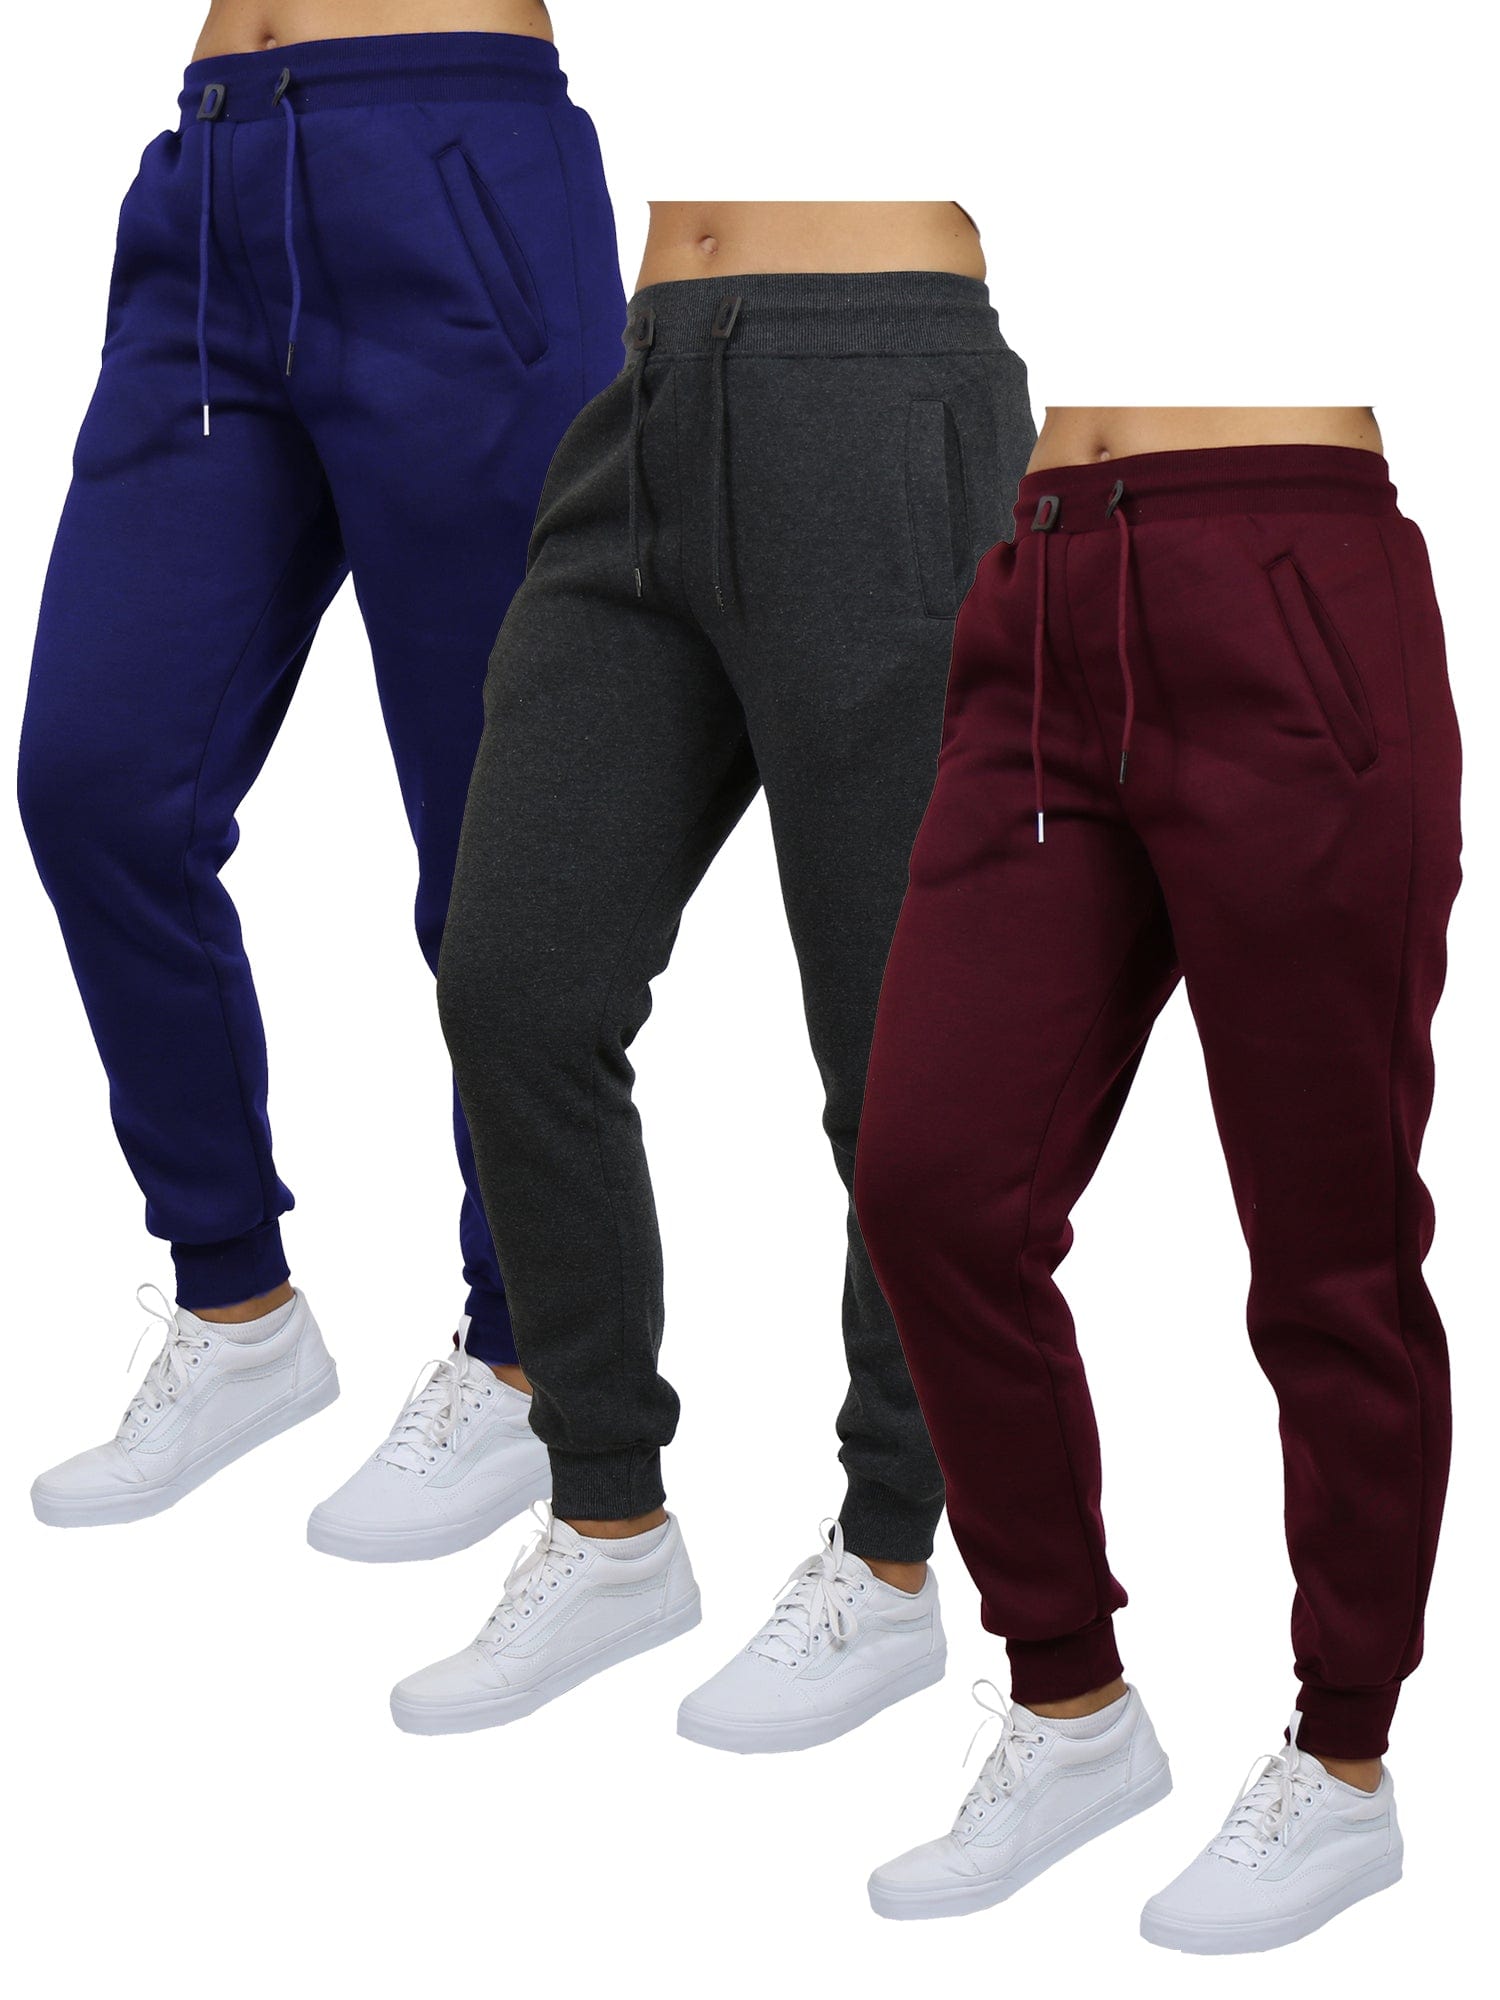  Gvraslvet Women's Cinch Bottom Sweatpants Pockets High